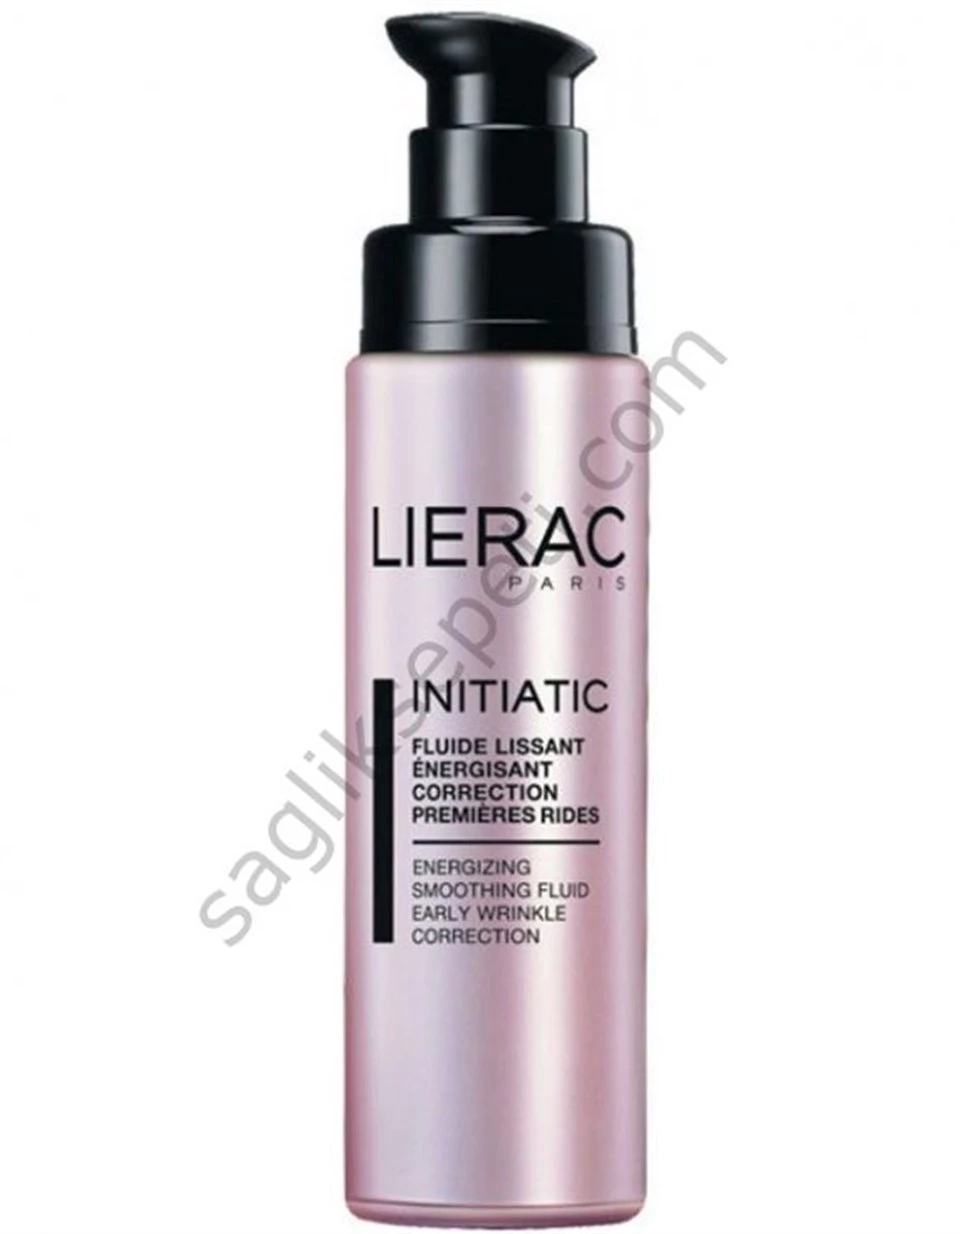 Lierac Initiatic Energizing Smoothing Fluid Early Wrinkle Correction 40ml